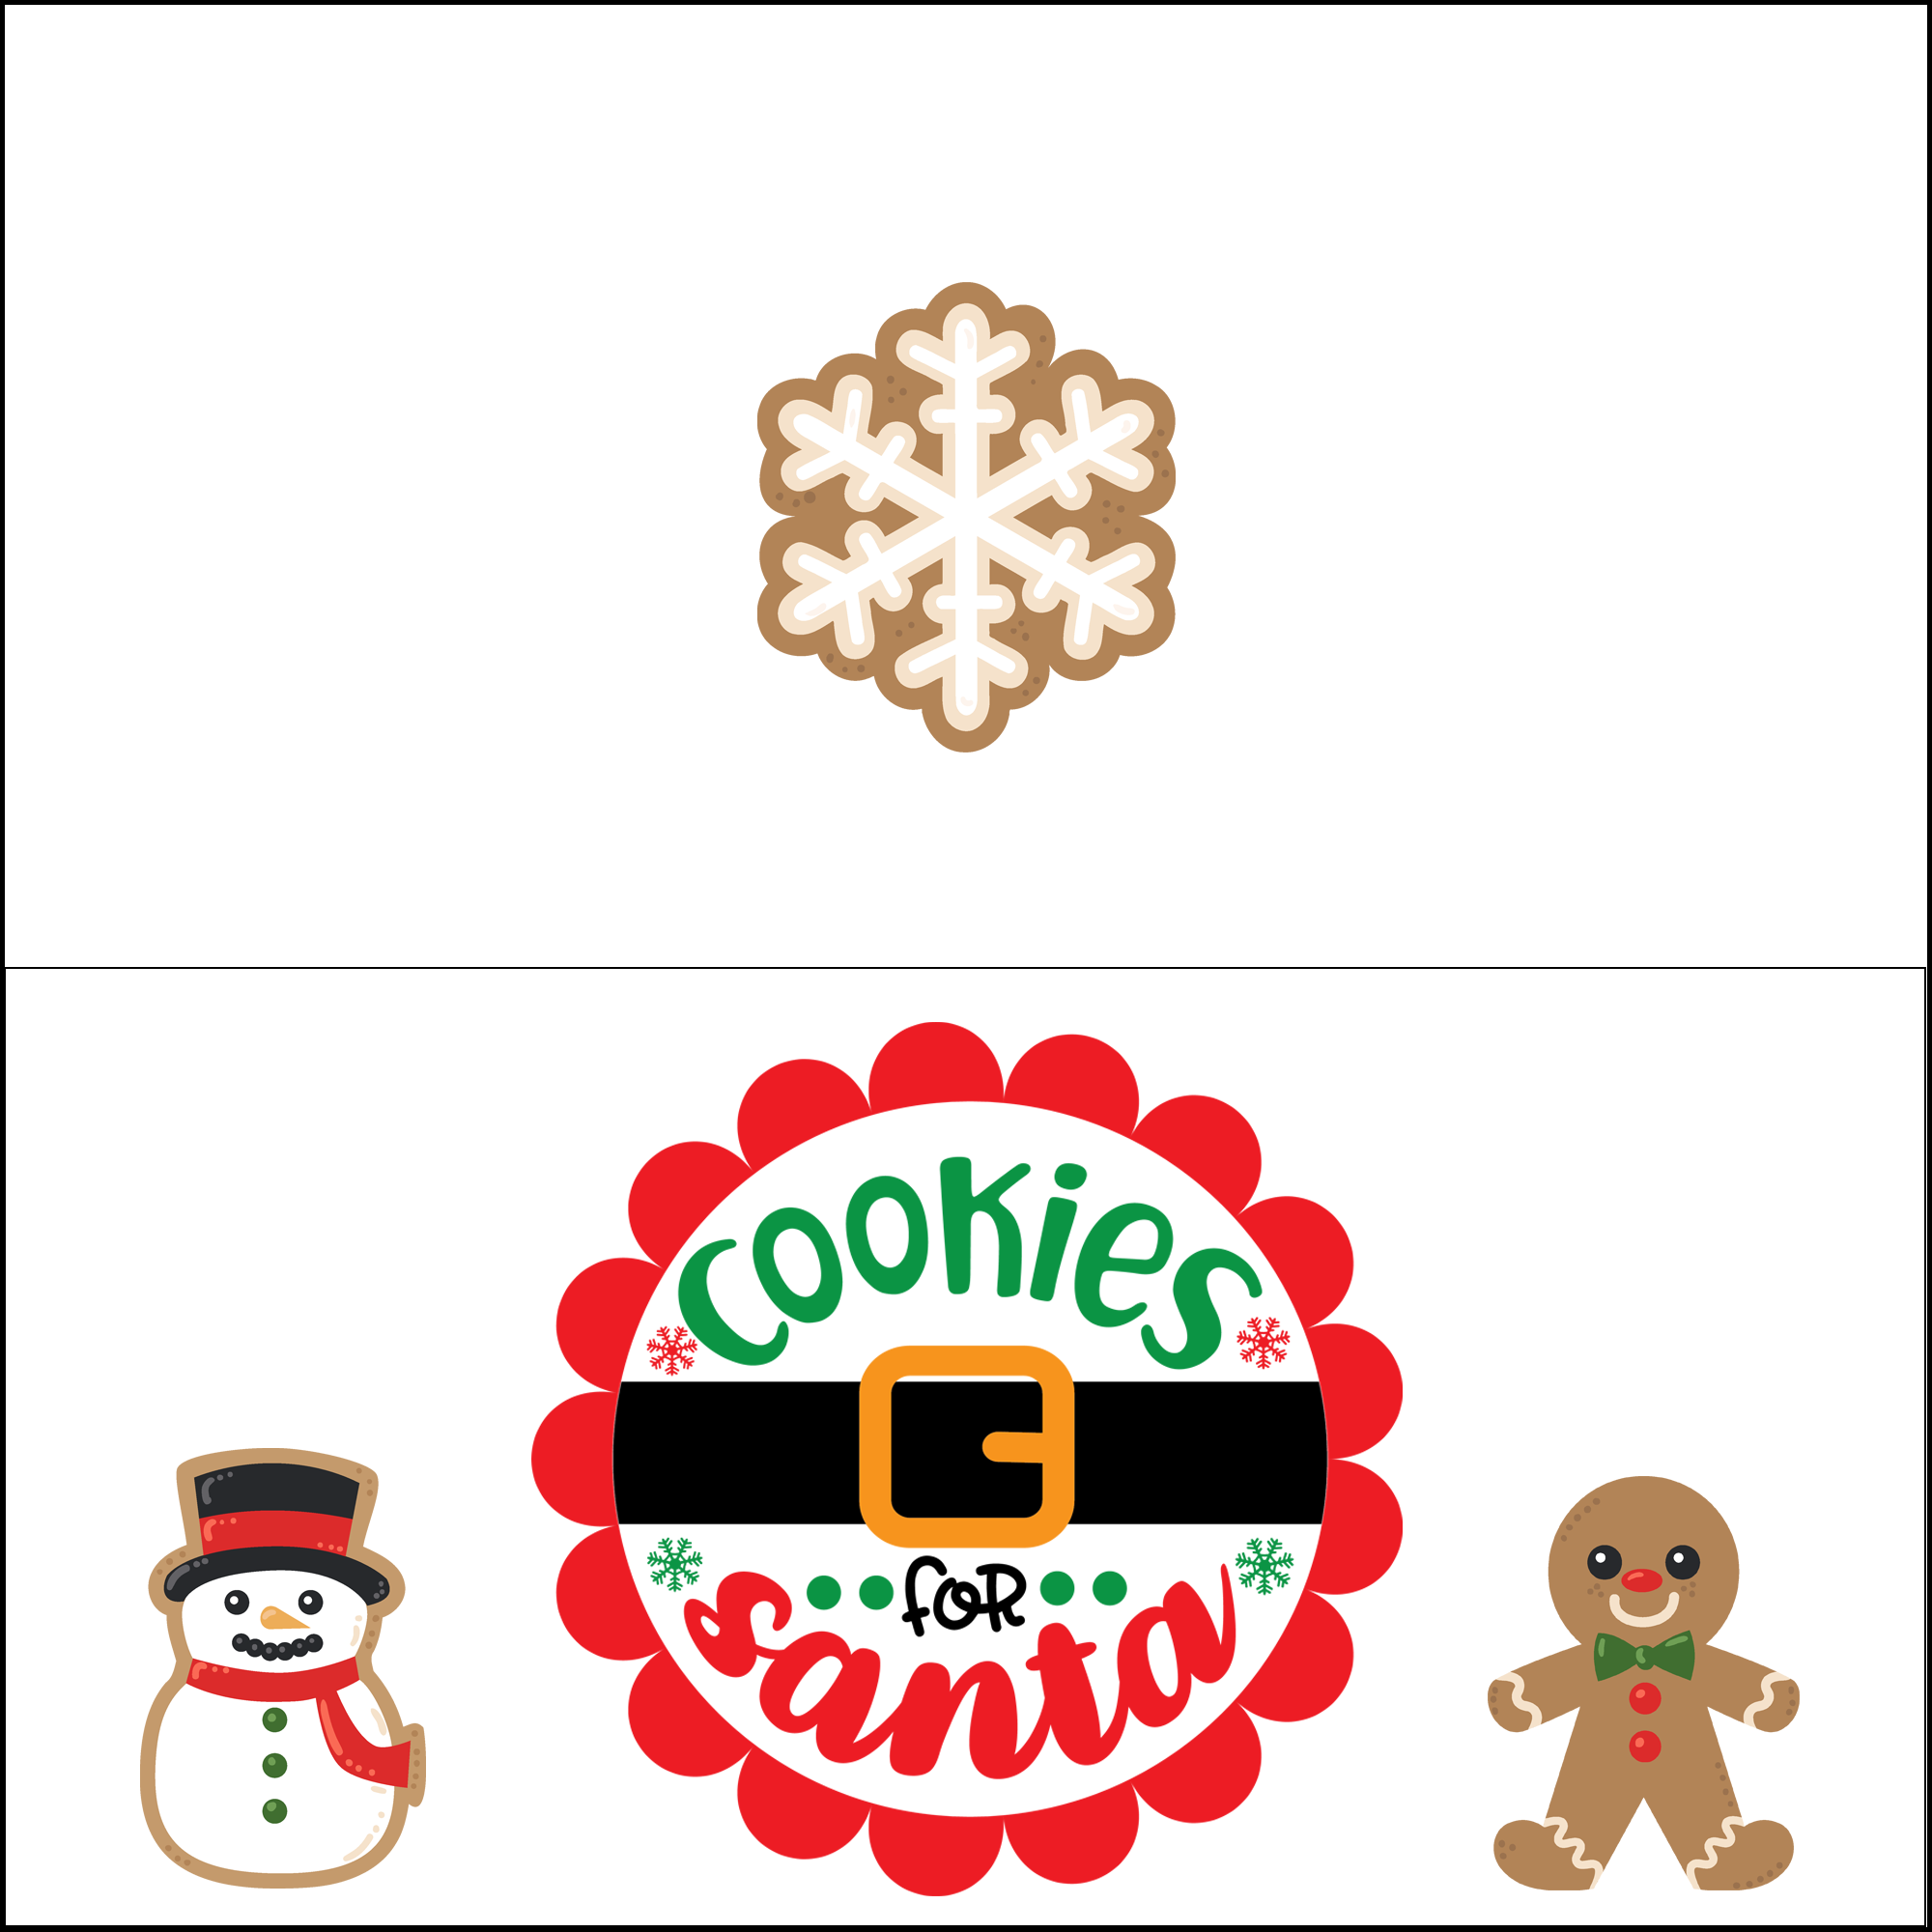 Cookies for santa signs